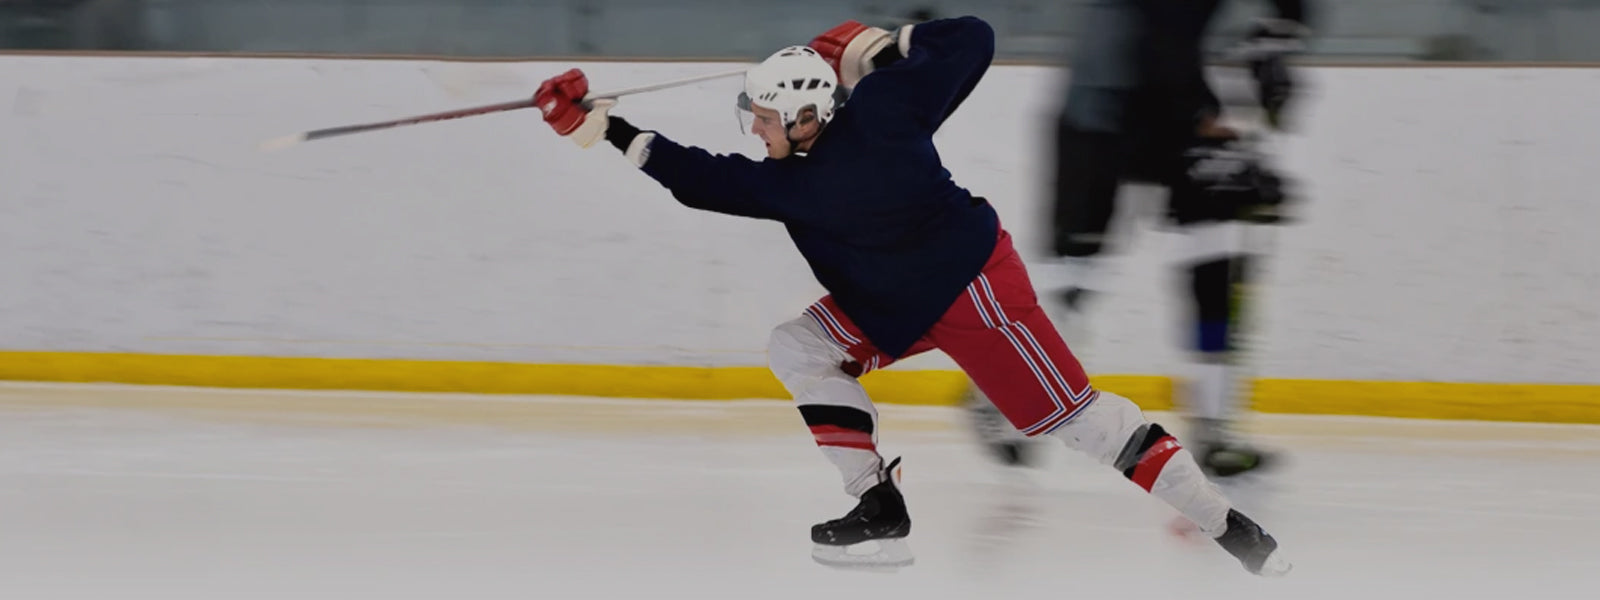 Cut-Resistant Hockey Socks Header Image, Man playing hockey